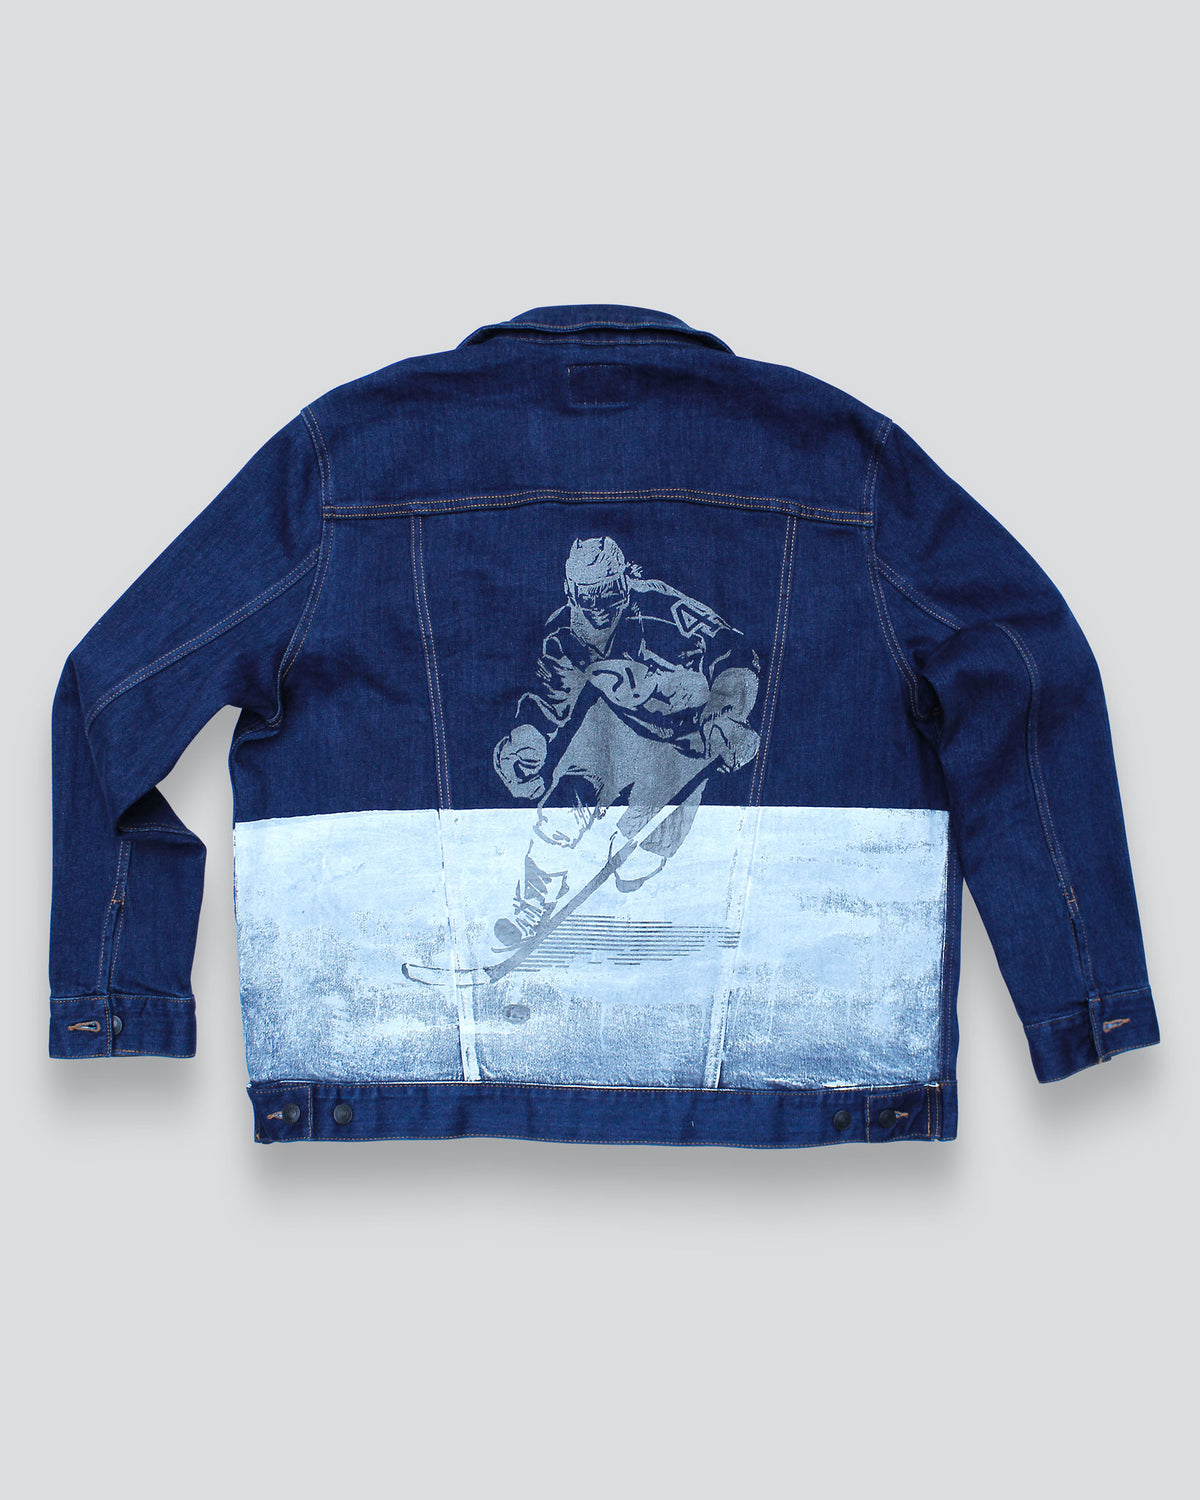 ALL-STAR AWAY Hockey Denim Jacket